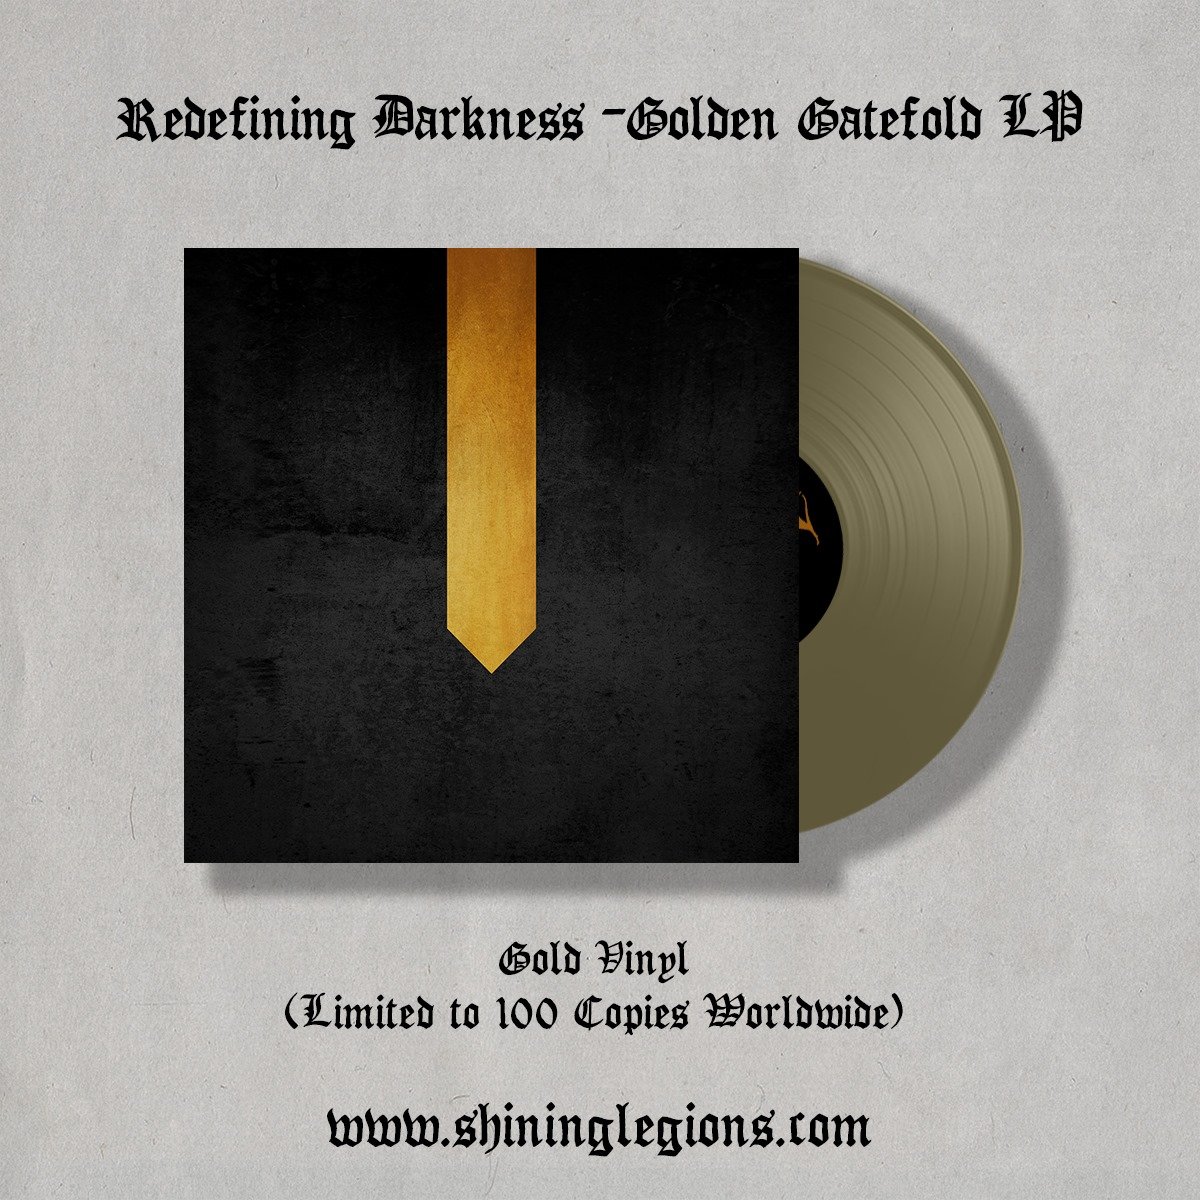 Shining Redefining Darkness LP (Gold Vinyl)